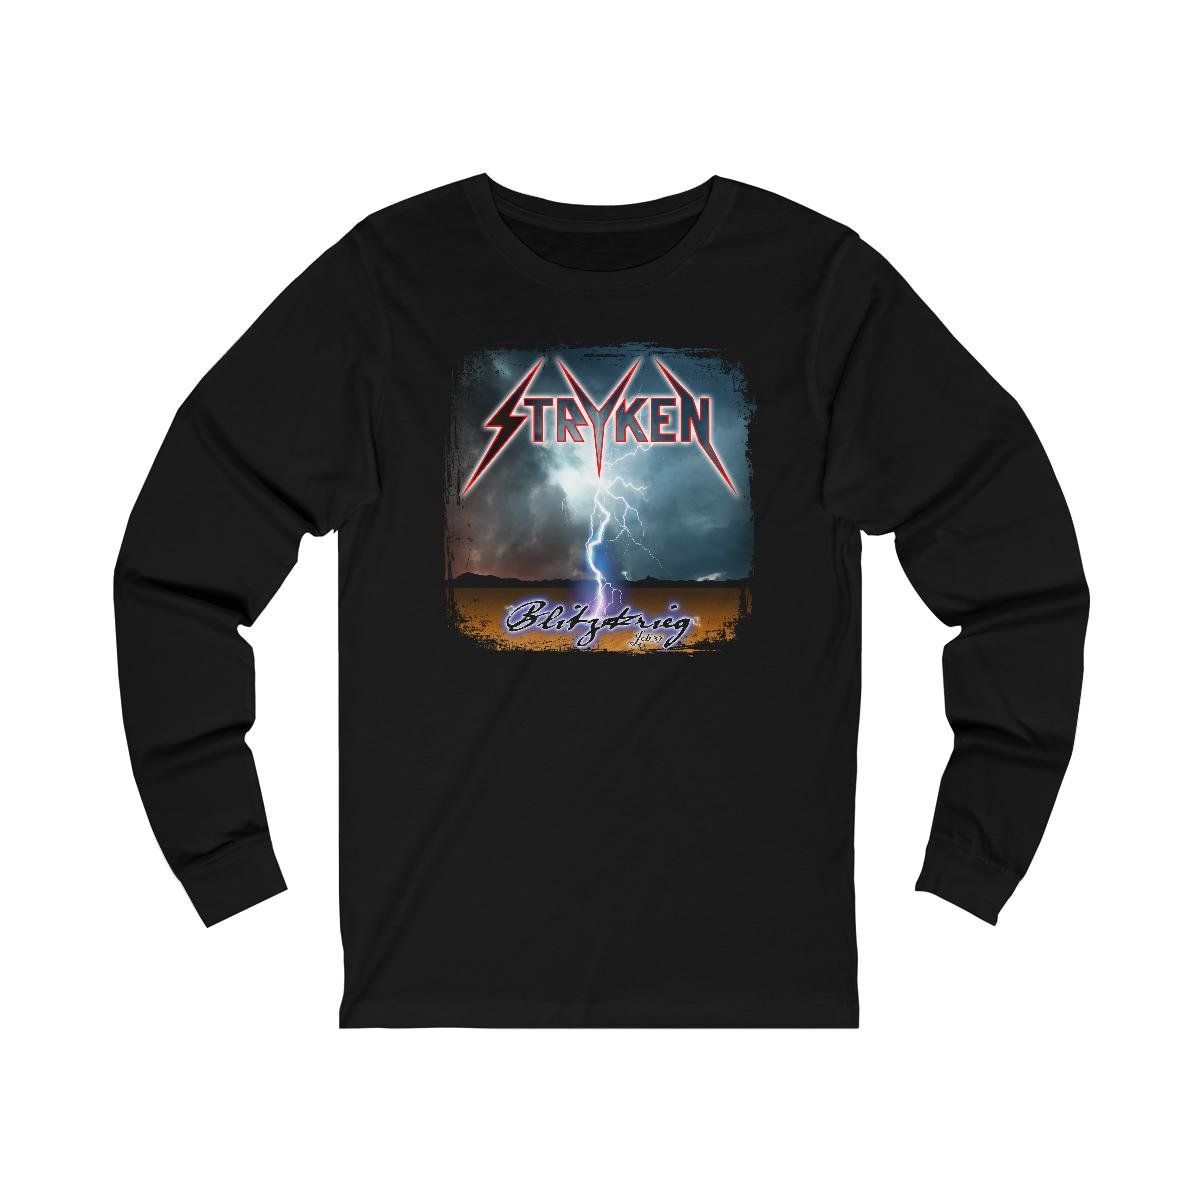 Stryken – Blitzkrieg Long Sleeve Tshirt